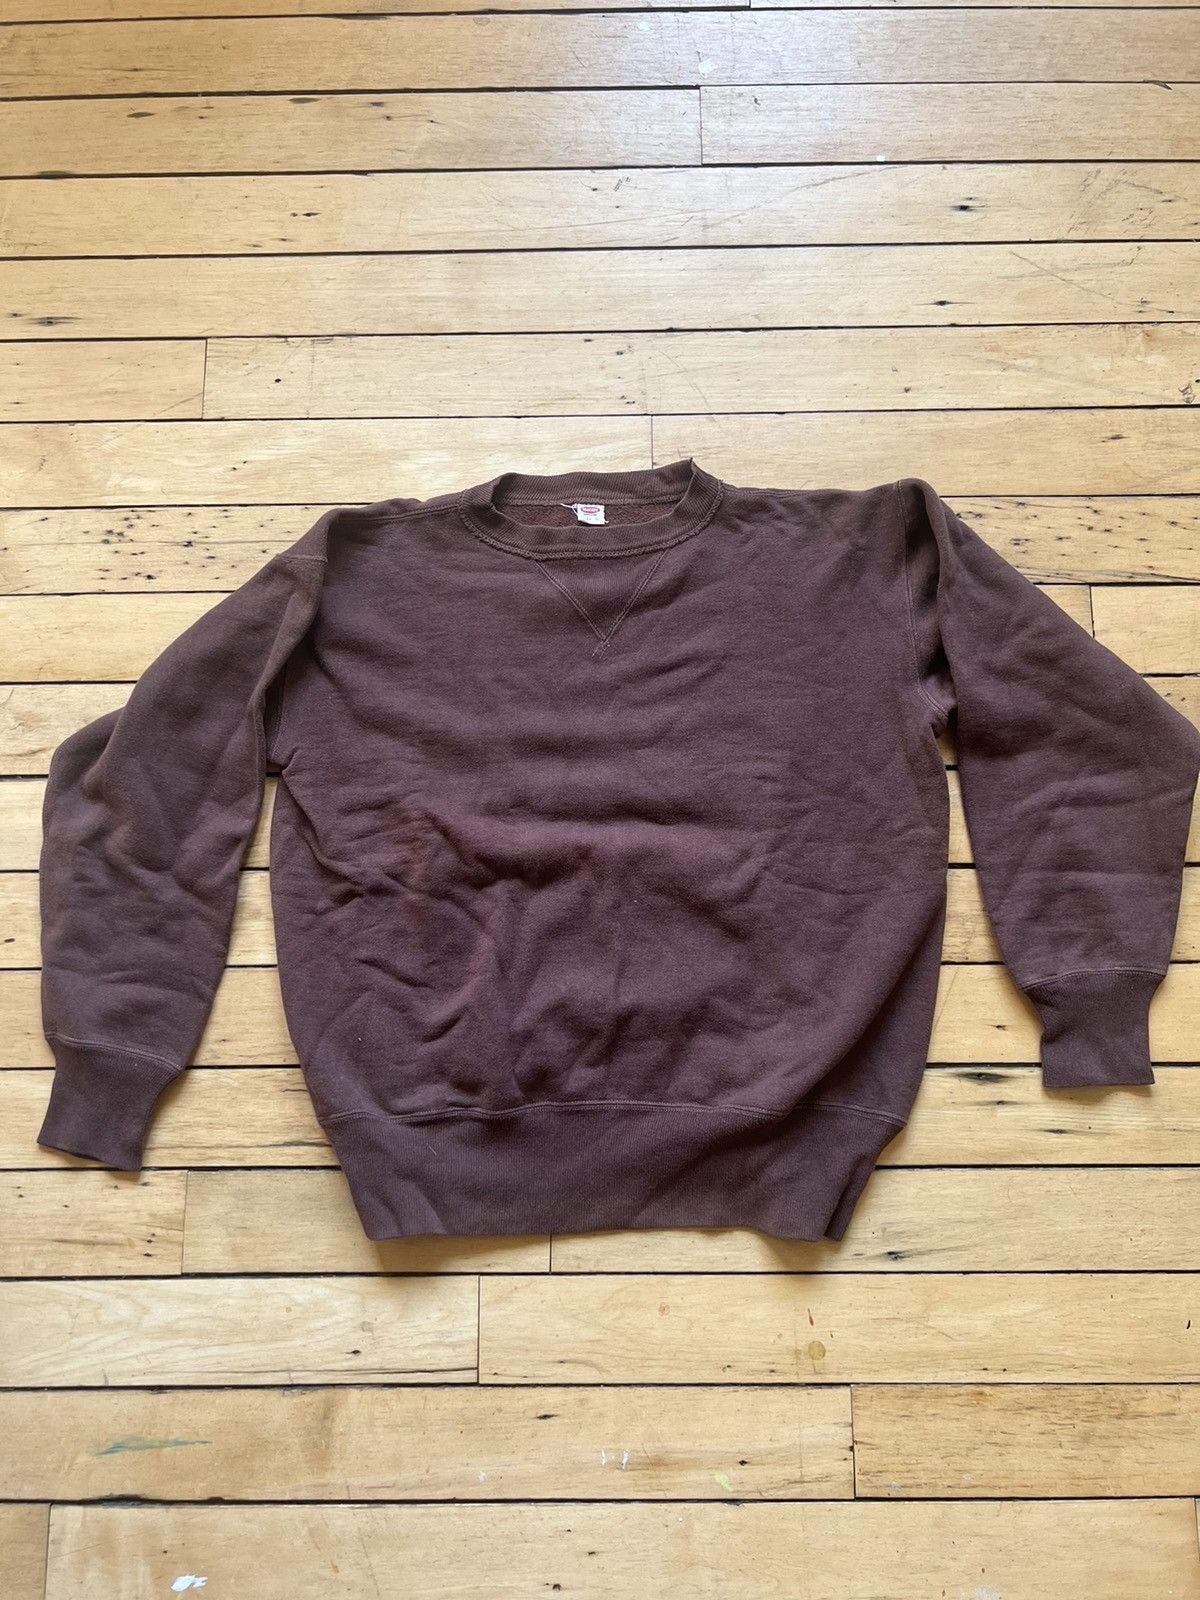 The Real McCoy's Crewneck Sweatshirt Size US S / EU 44-46 / 1 - 1 Preview